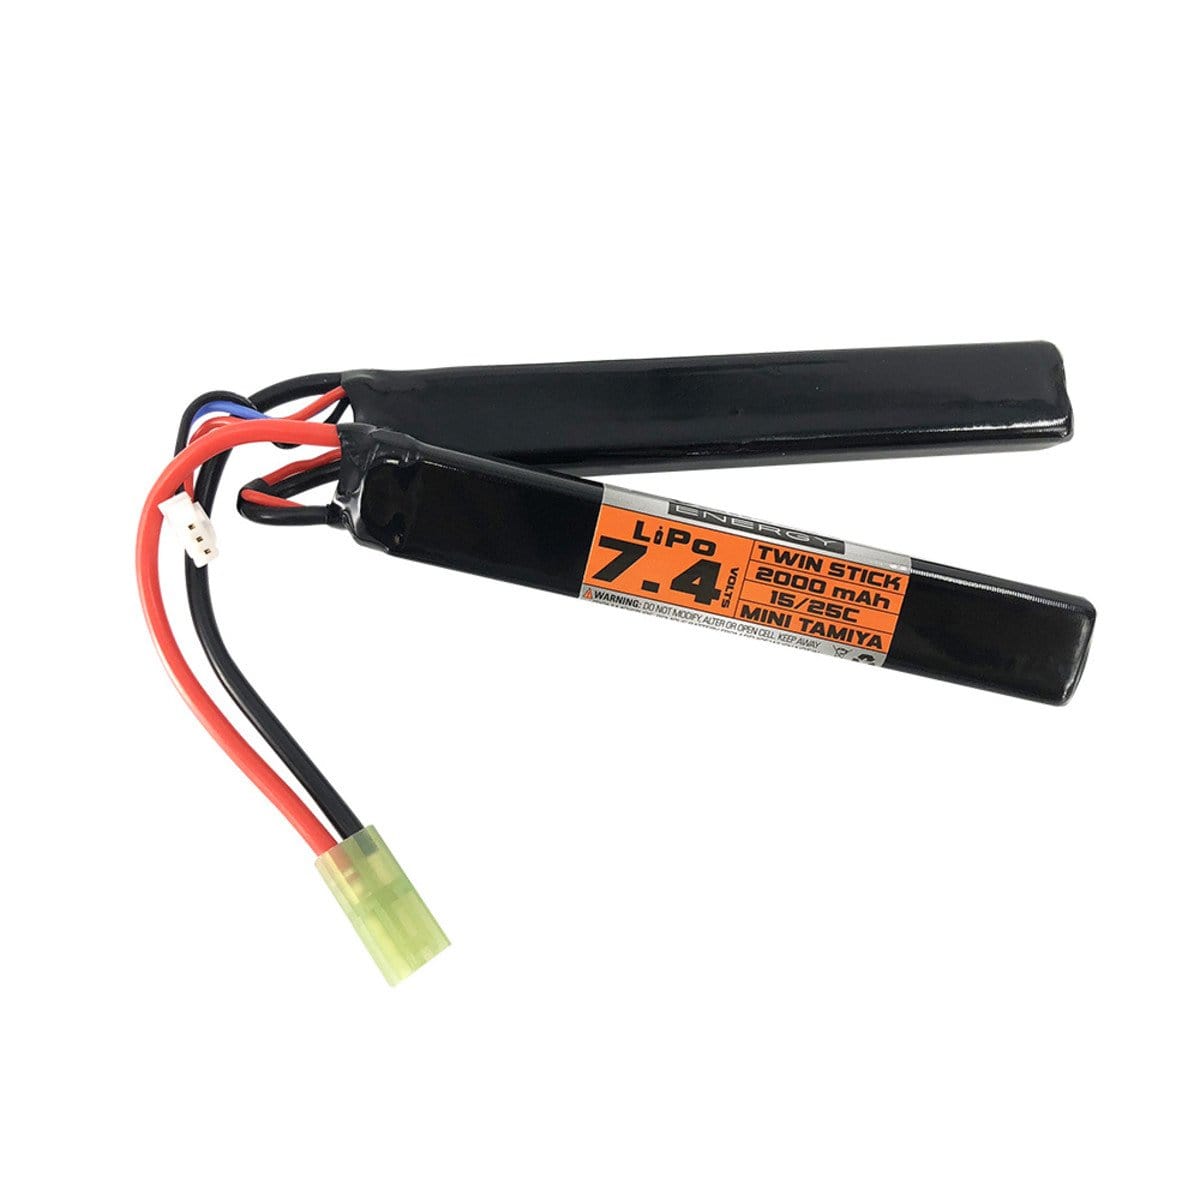 Valken LiPo Battery - 7.4v 2000mAh 15/25c Twin Stick / Tamiya - Eminent Paintball And Airsoft